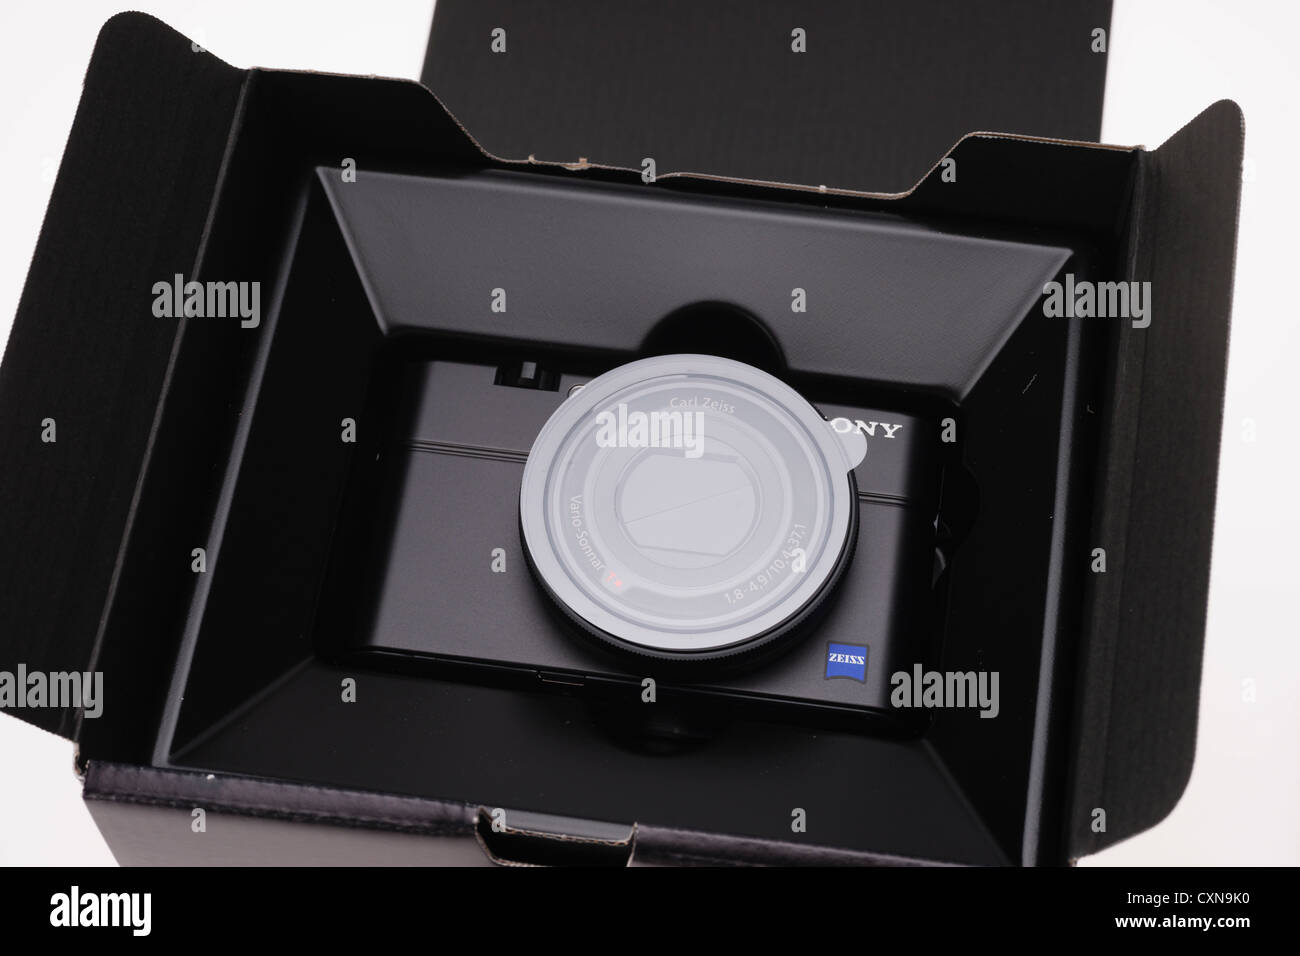 High-end Sony Cyber-shot DSC-RX100 large sensor zoom compact digital camera 20 megapixels. Sealed inside packaging. Stock Photo